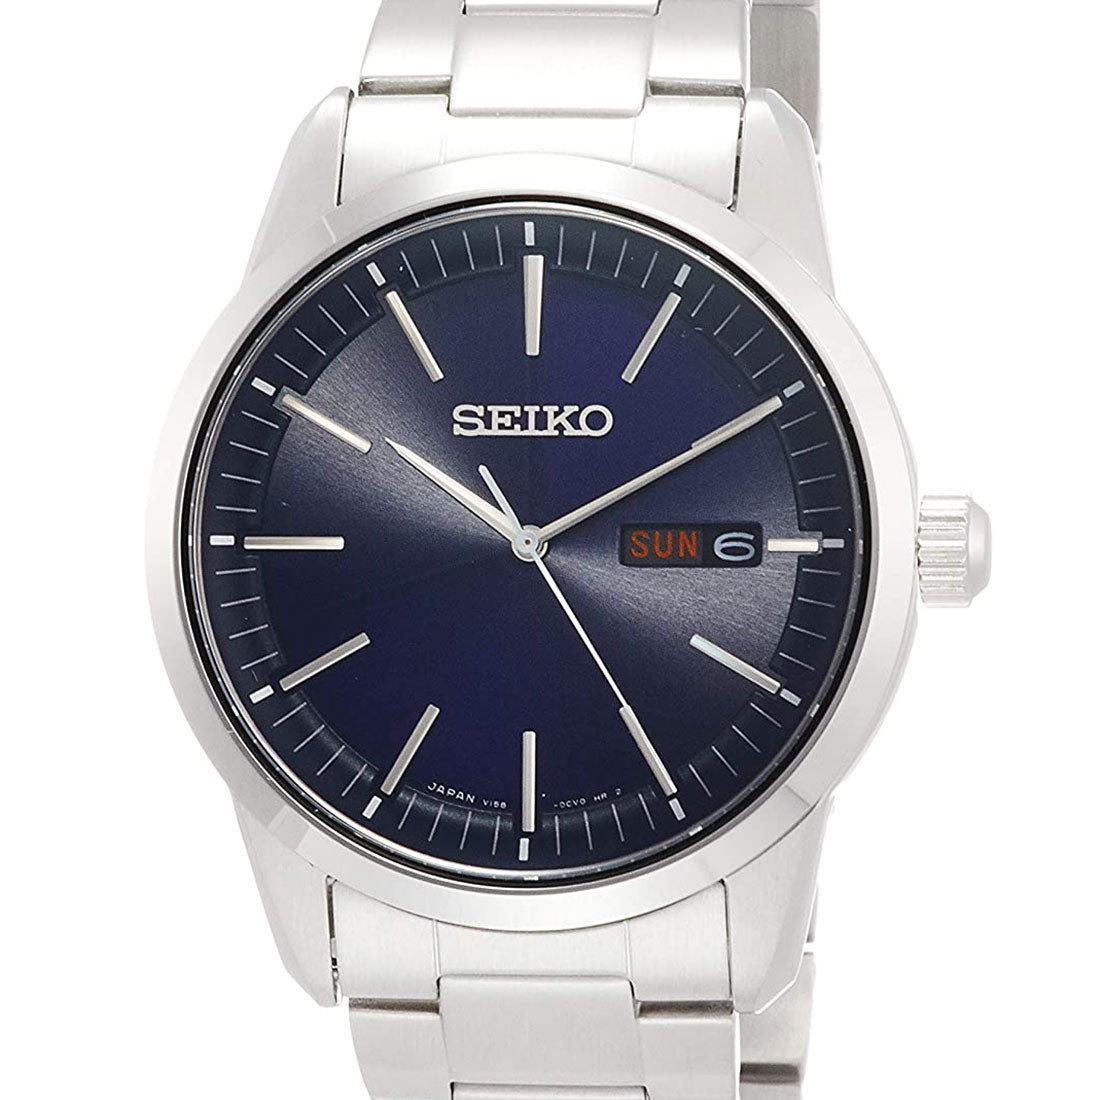 Seiko Selection JDM Watch SBPX121 -Seiko